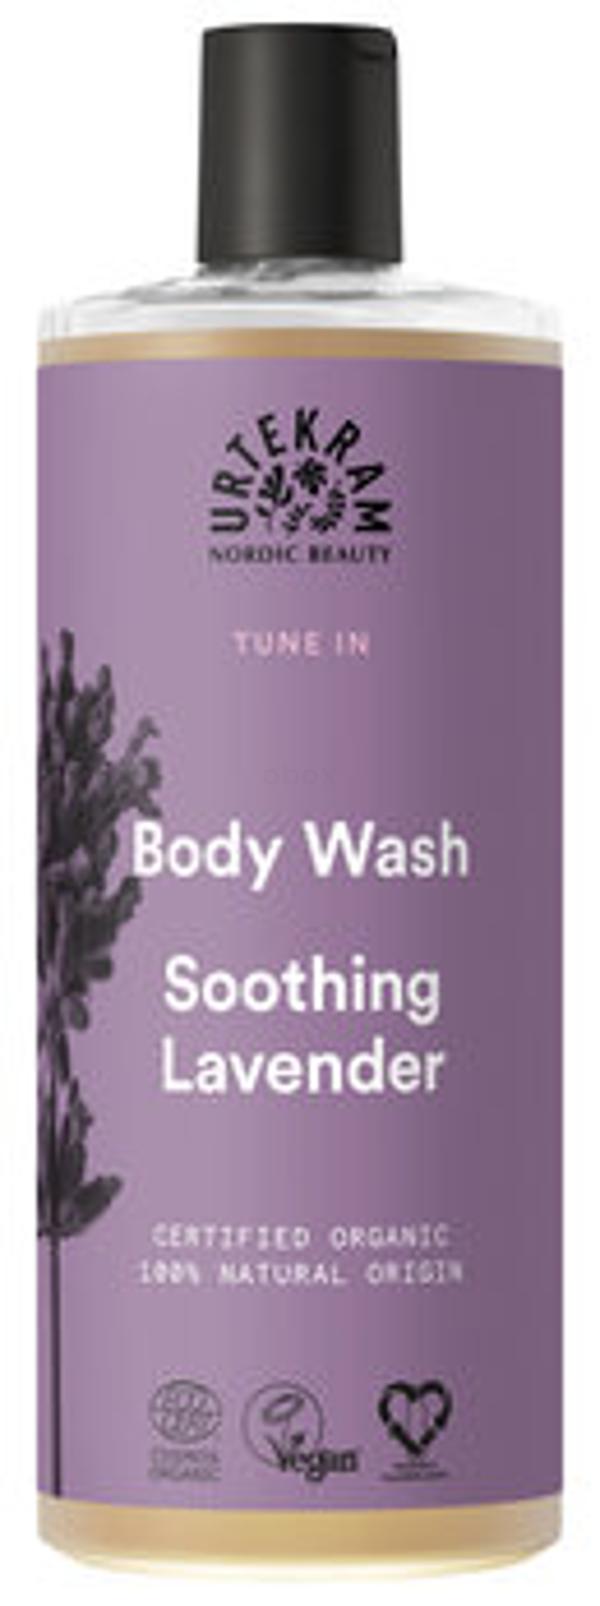 Produktfoto zu Soothing Lavender Body Wash